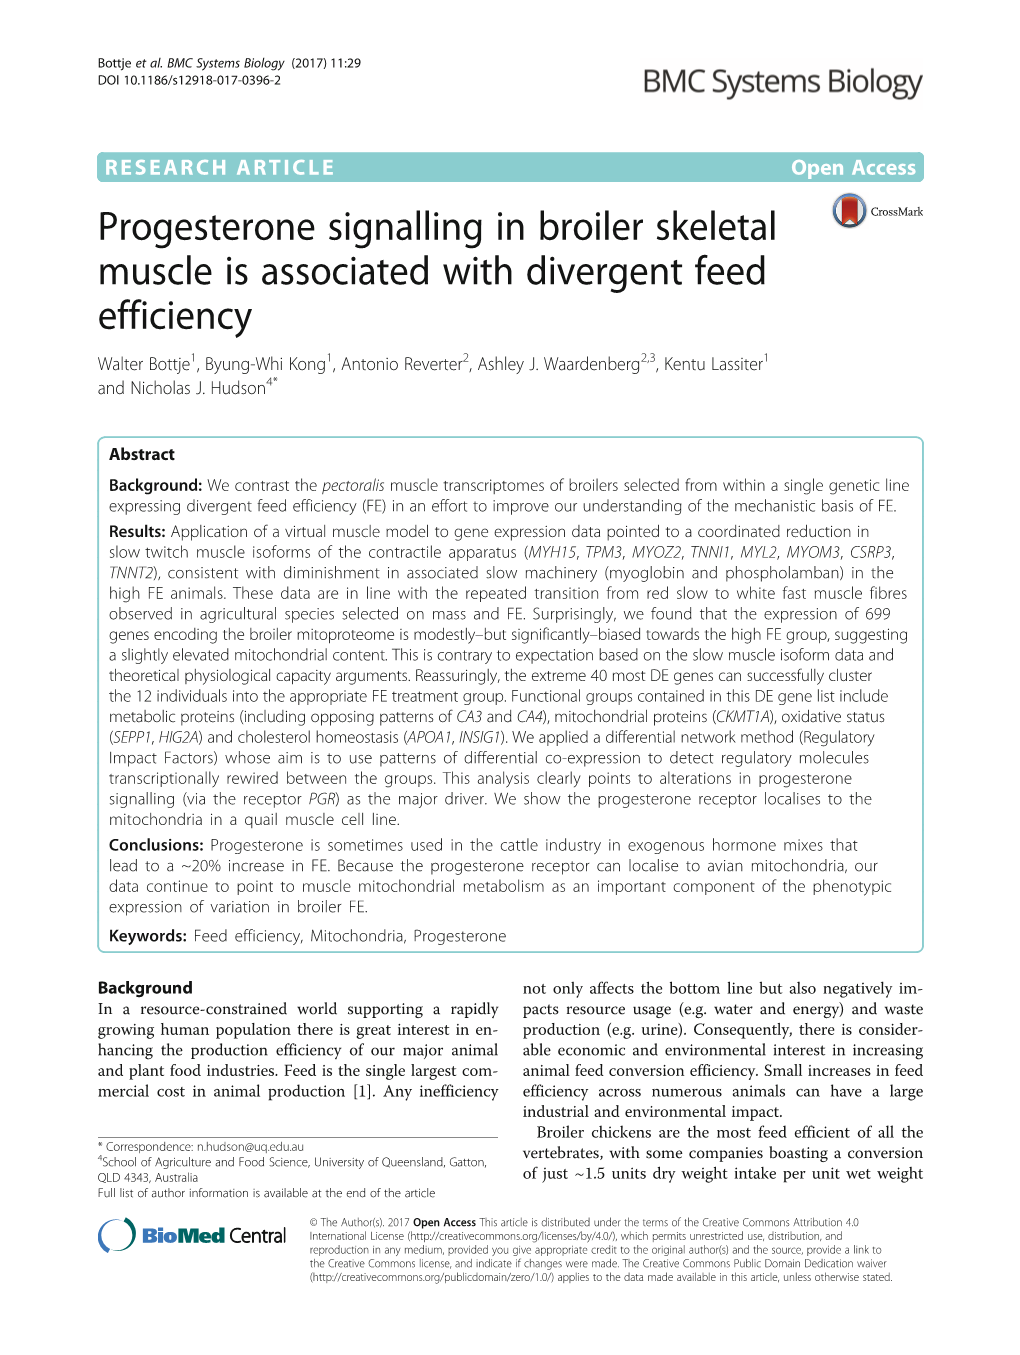 Progesterone Signalling in Broiler Skeletal Muscle Is Associated with Divergent Feed Efficiency Walter Bottje1, Byung-Whi Kong1, Antonio Reverter2, Ashley J